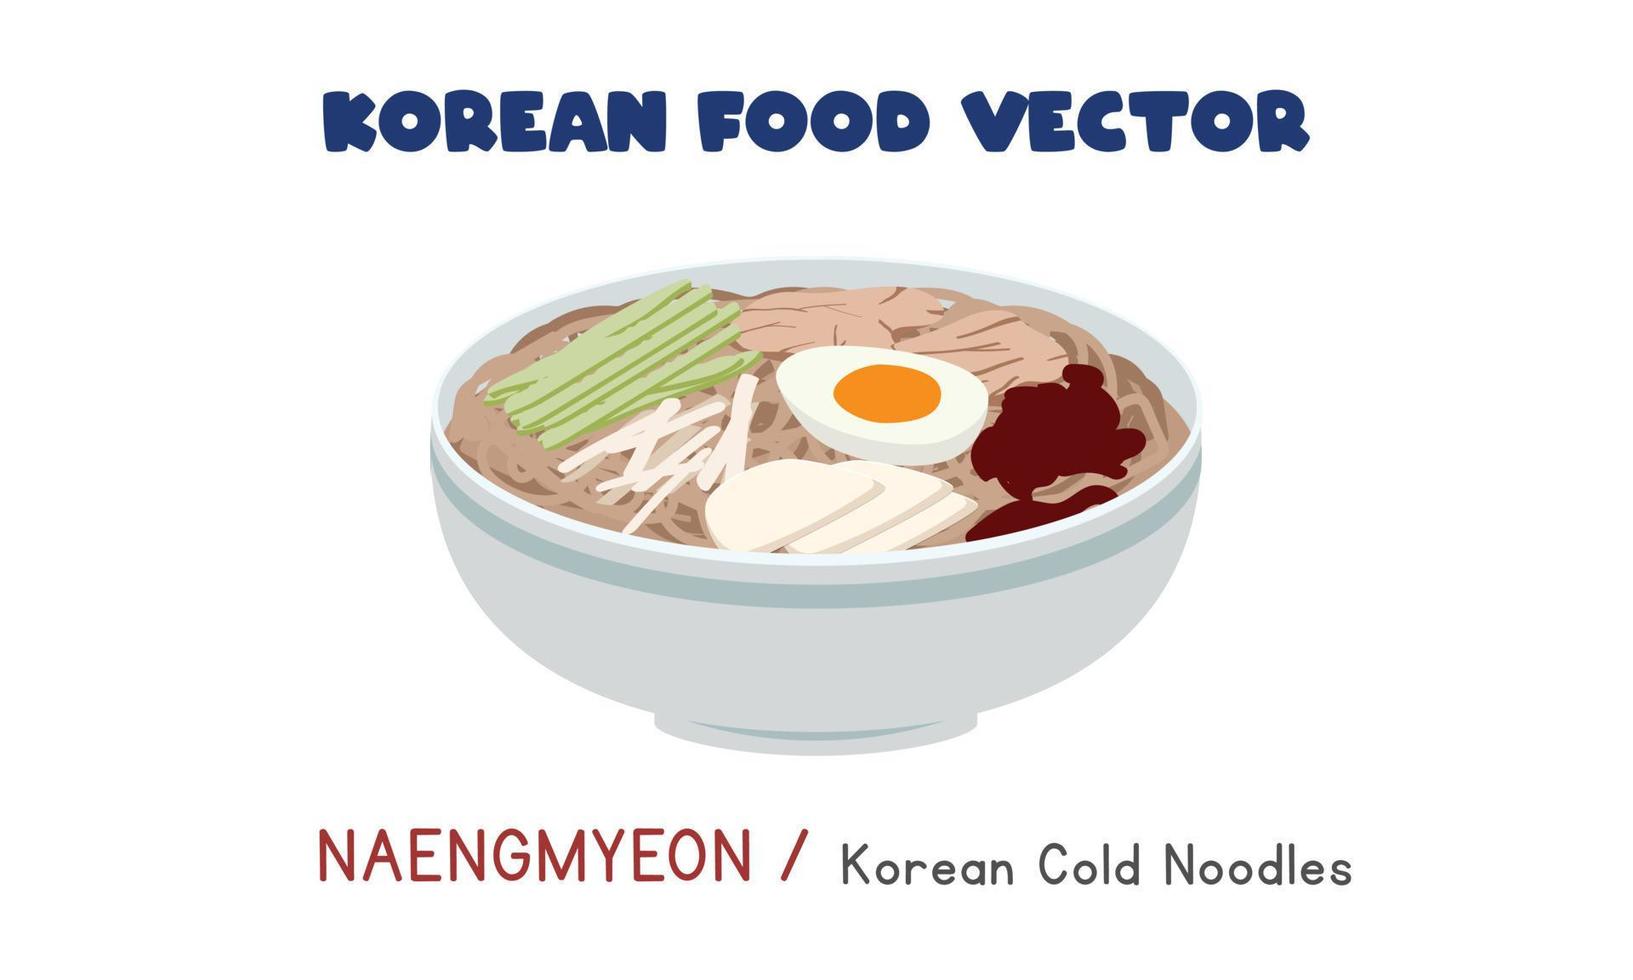 Korean Naengmyeon - Korean Cold Noodles flat vector design illustration, clipart cartoon style. Asian food. Korean cuisine. Korean cold noodle soup vector